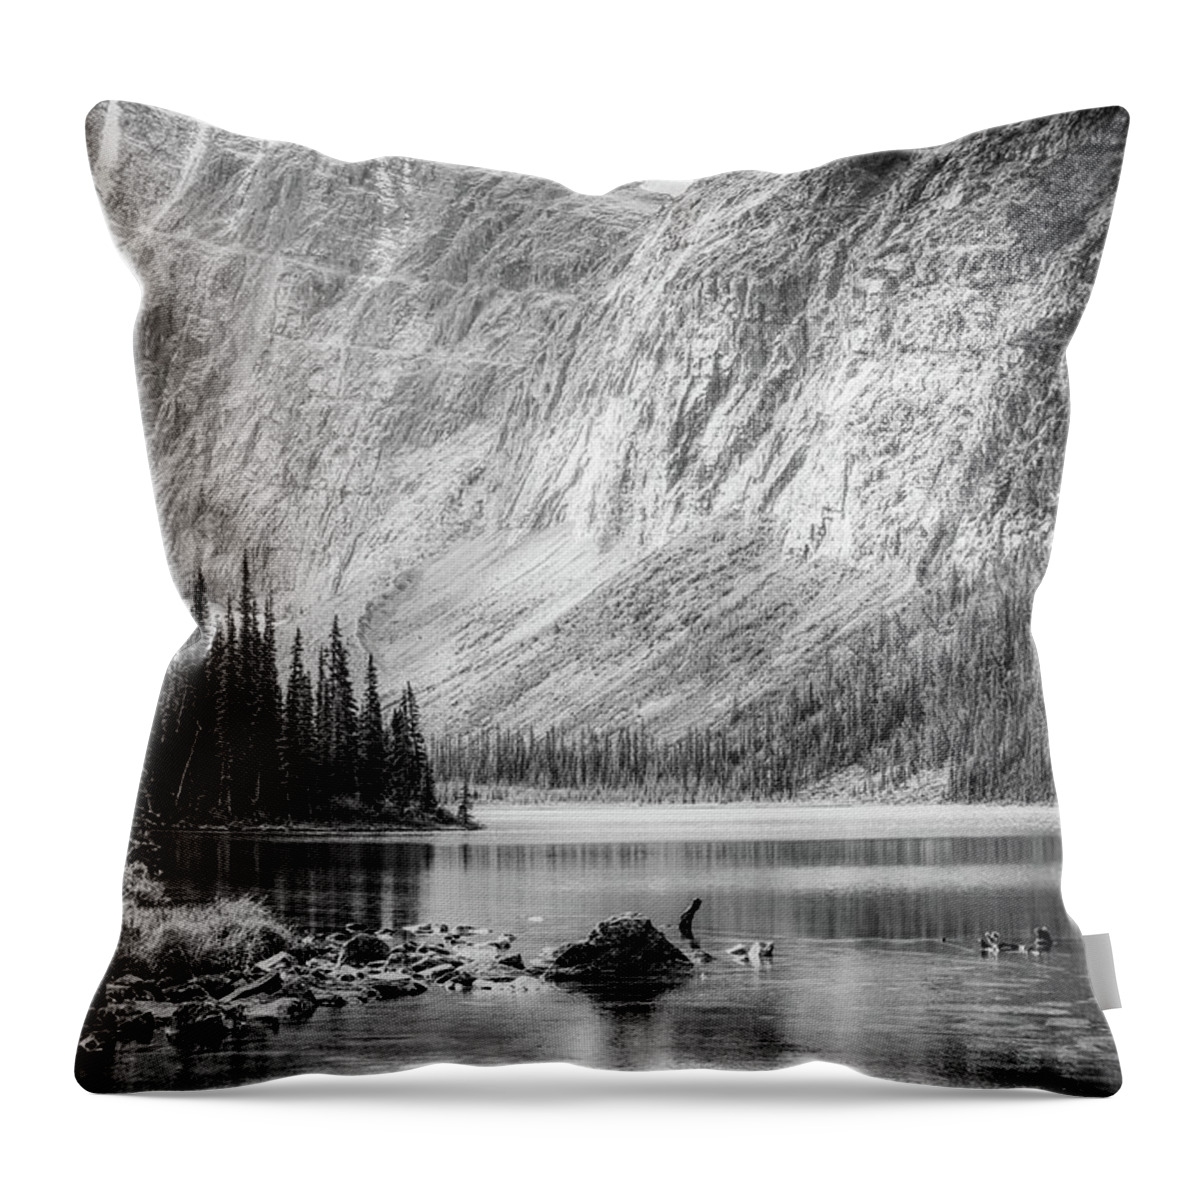 Mountain Lake Vertical Panorama Throw Pillow featuring the photograph Mountain Lake Vertical Panorama by Dan Sproul